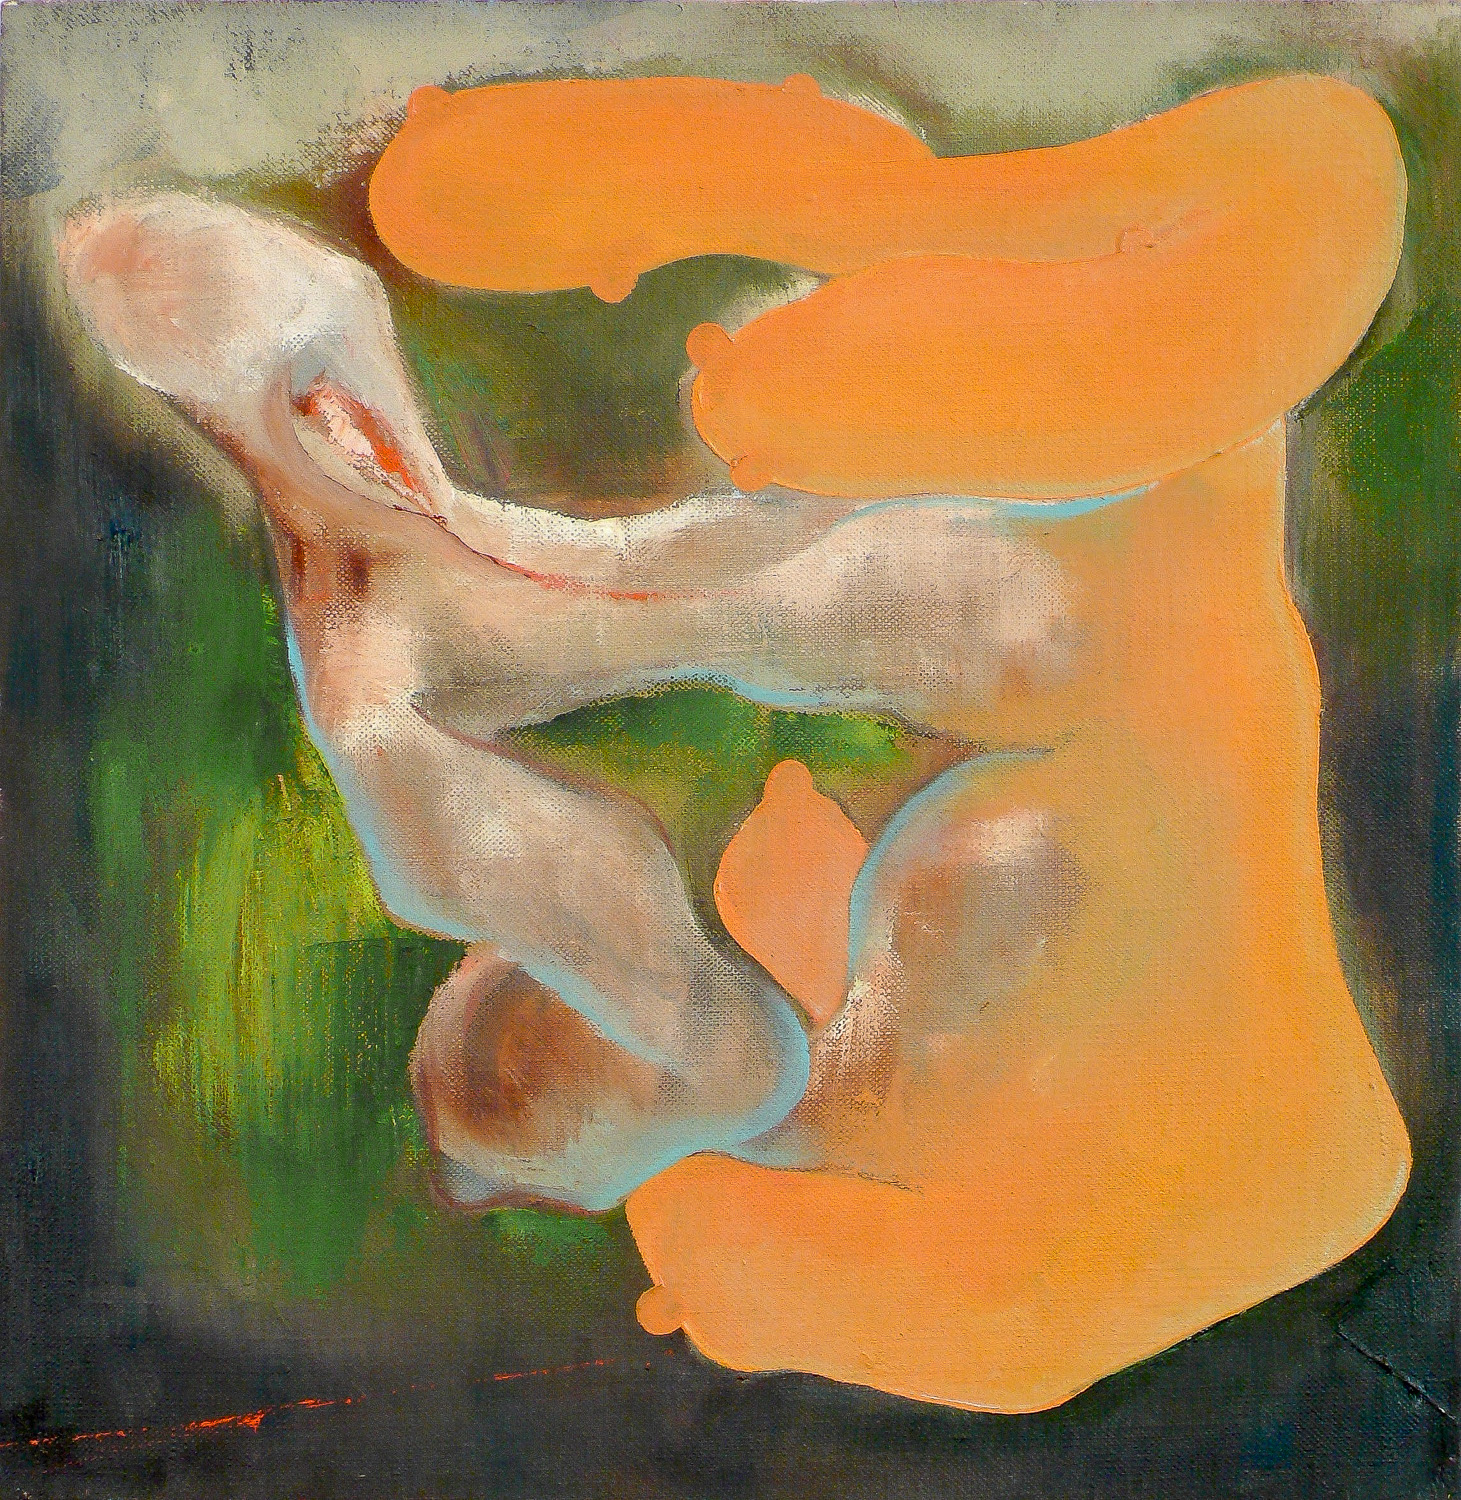    Self-Repel , 2003   Oil on linen   14 x 14"  